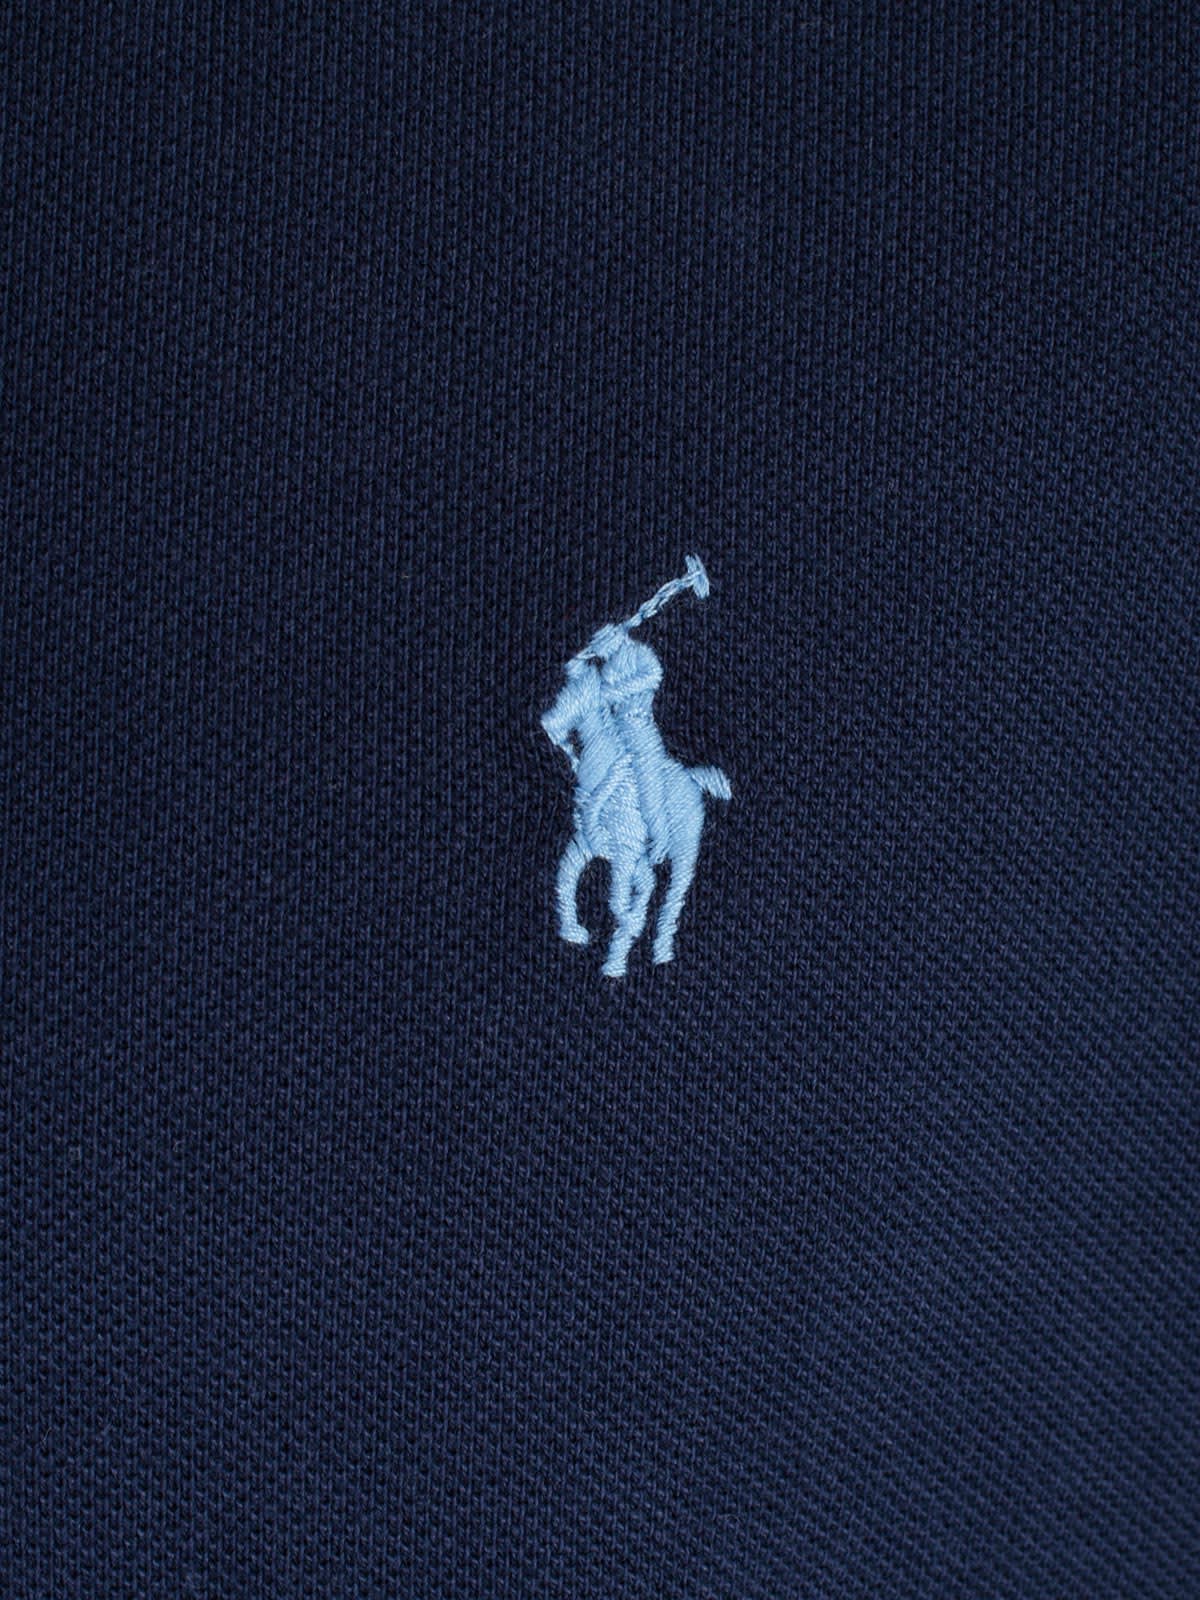 ralph lauren embroidered logo